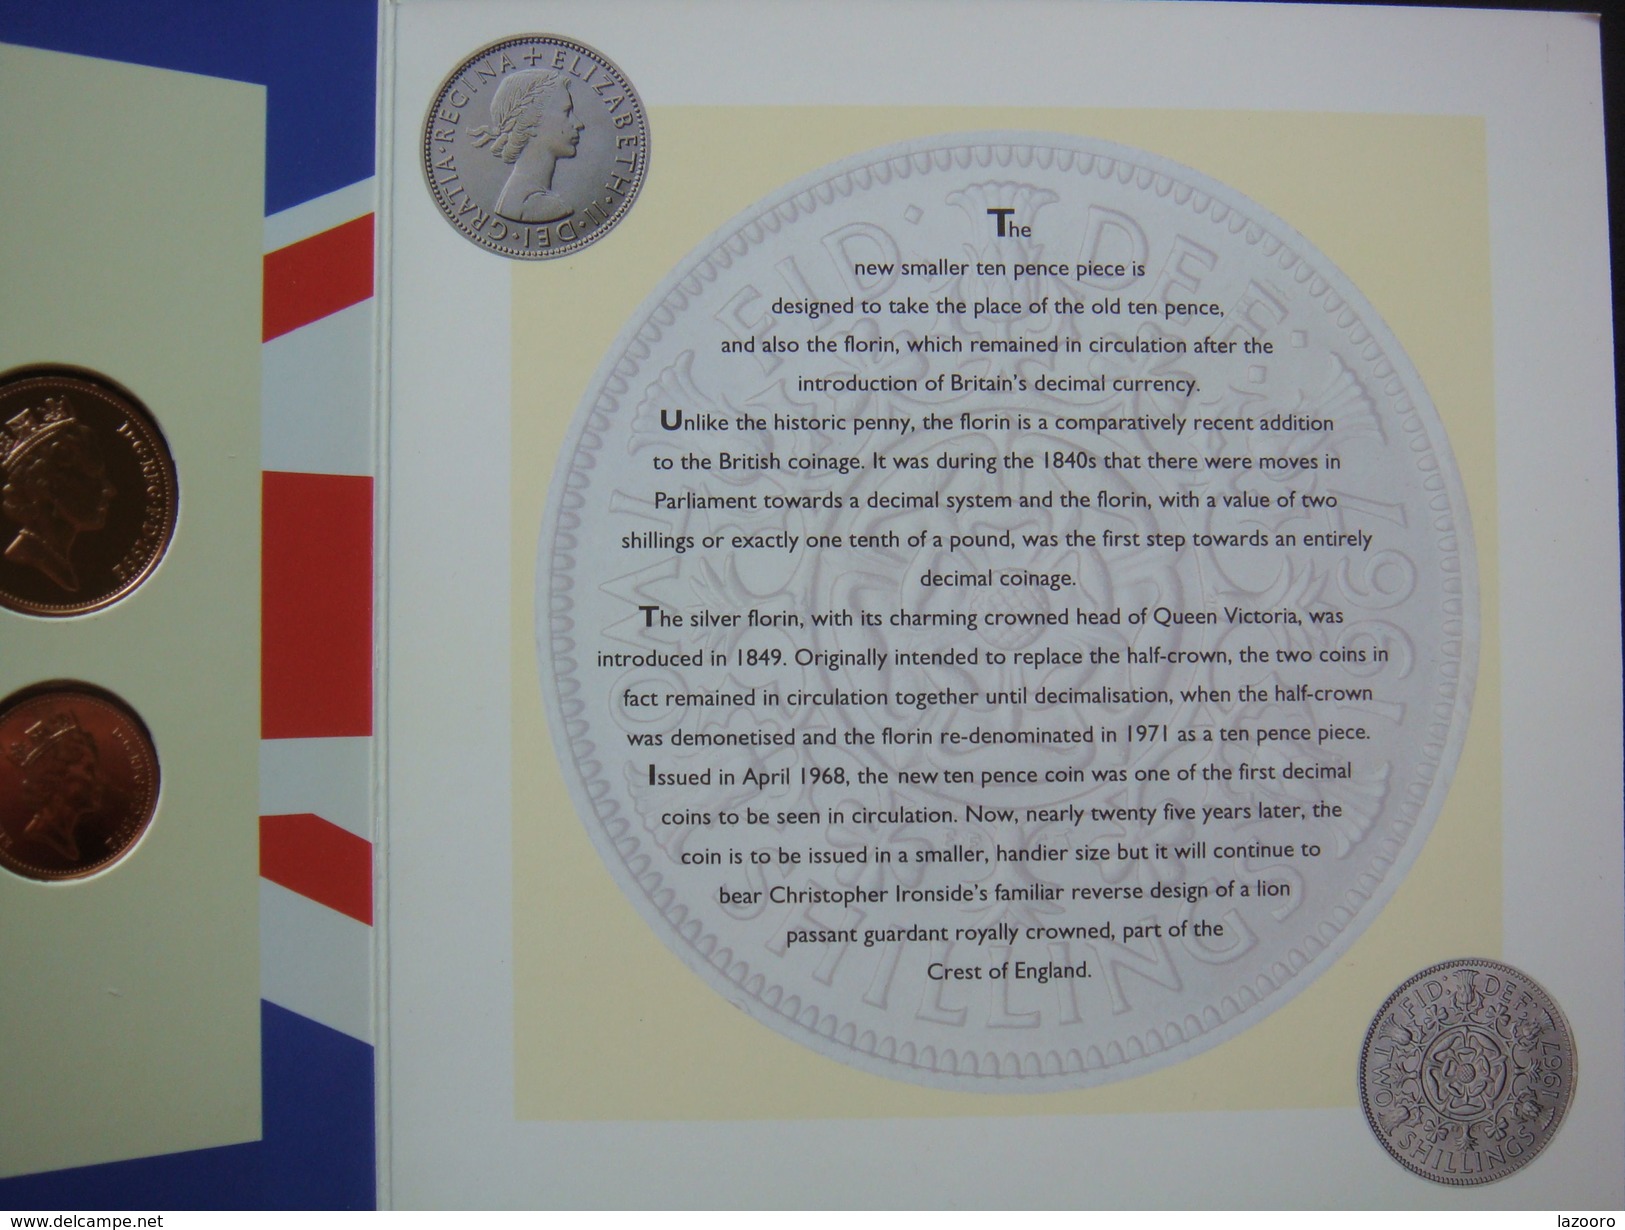 LaZooRo: 1992 Royal Mint UK BUNC Coin Collection, 9 Coins Set 1p - 1 £ including RARE EEC 50p 1992 1993